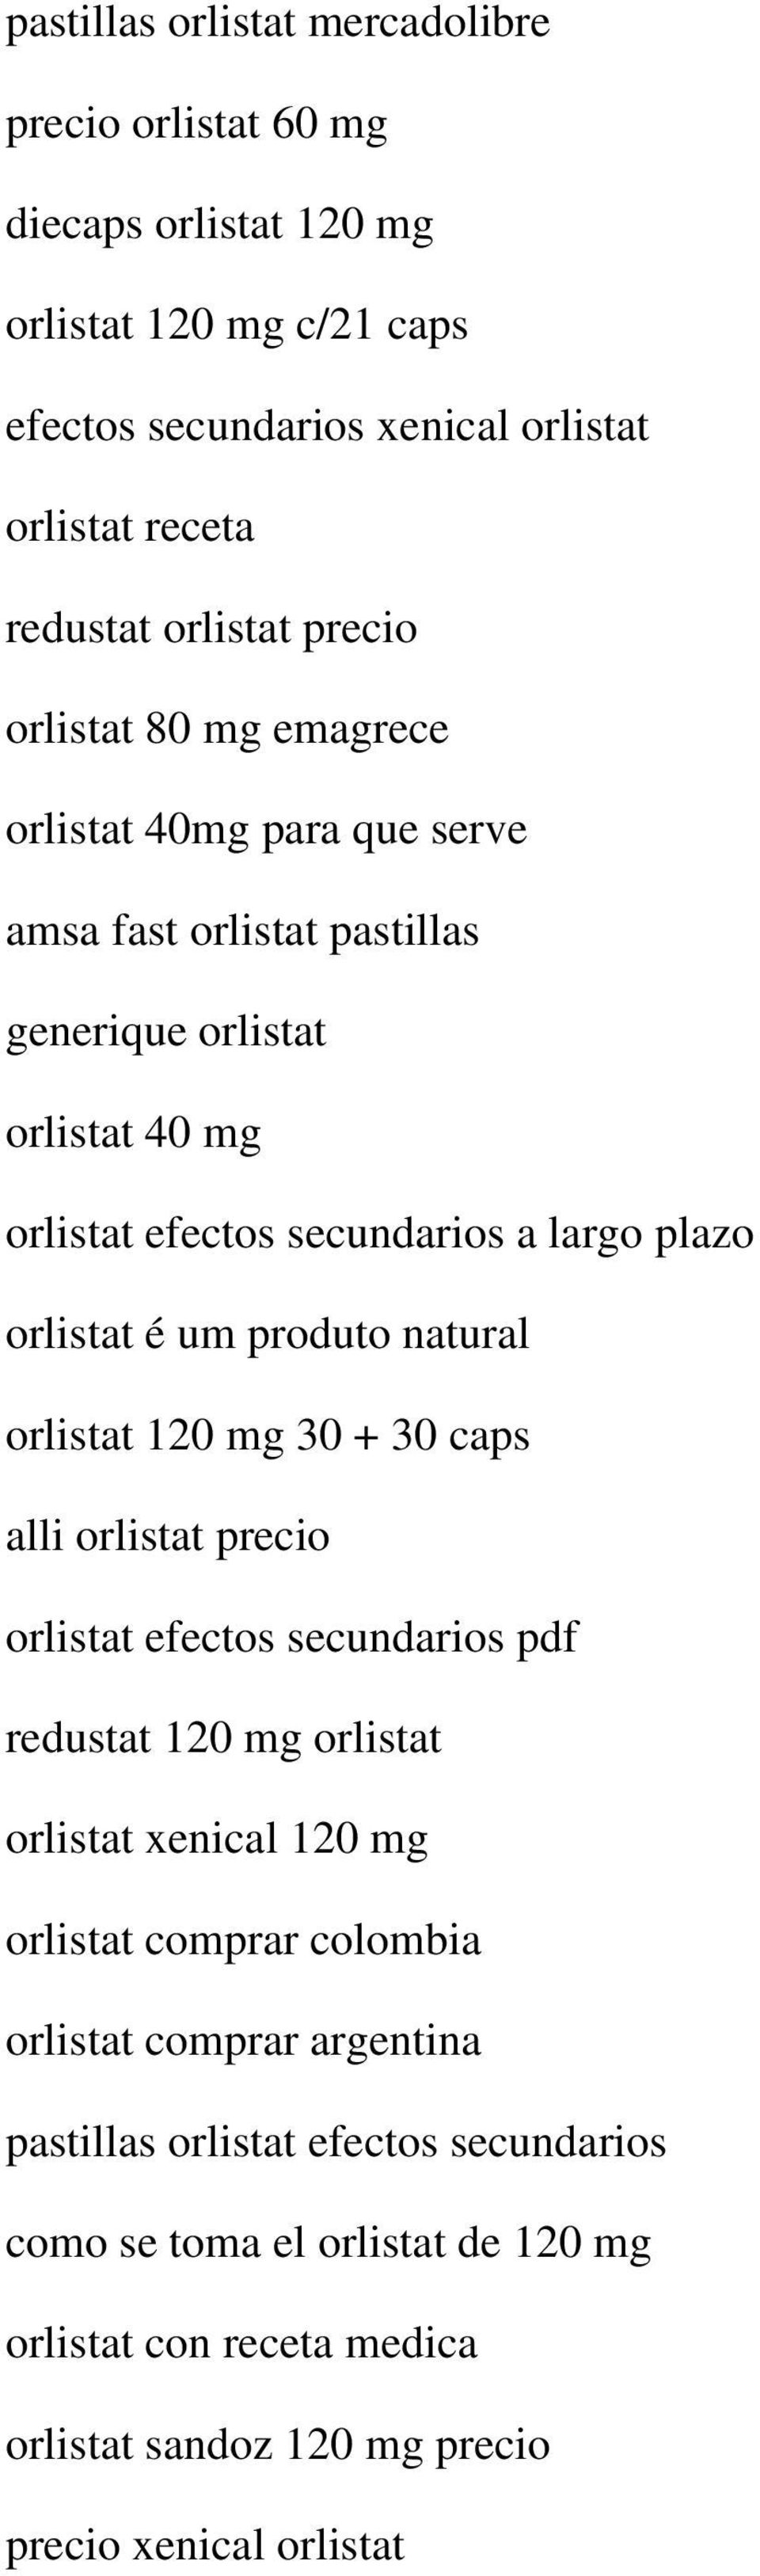 um produto natural orlistat 120 mg 30 + 30 caps alli orlistat precio orlistat efectos secundarios pdf redustat 120 mg orlistat orlistat xenical 120 mg orlistat comprar colombia